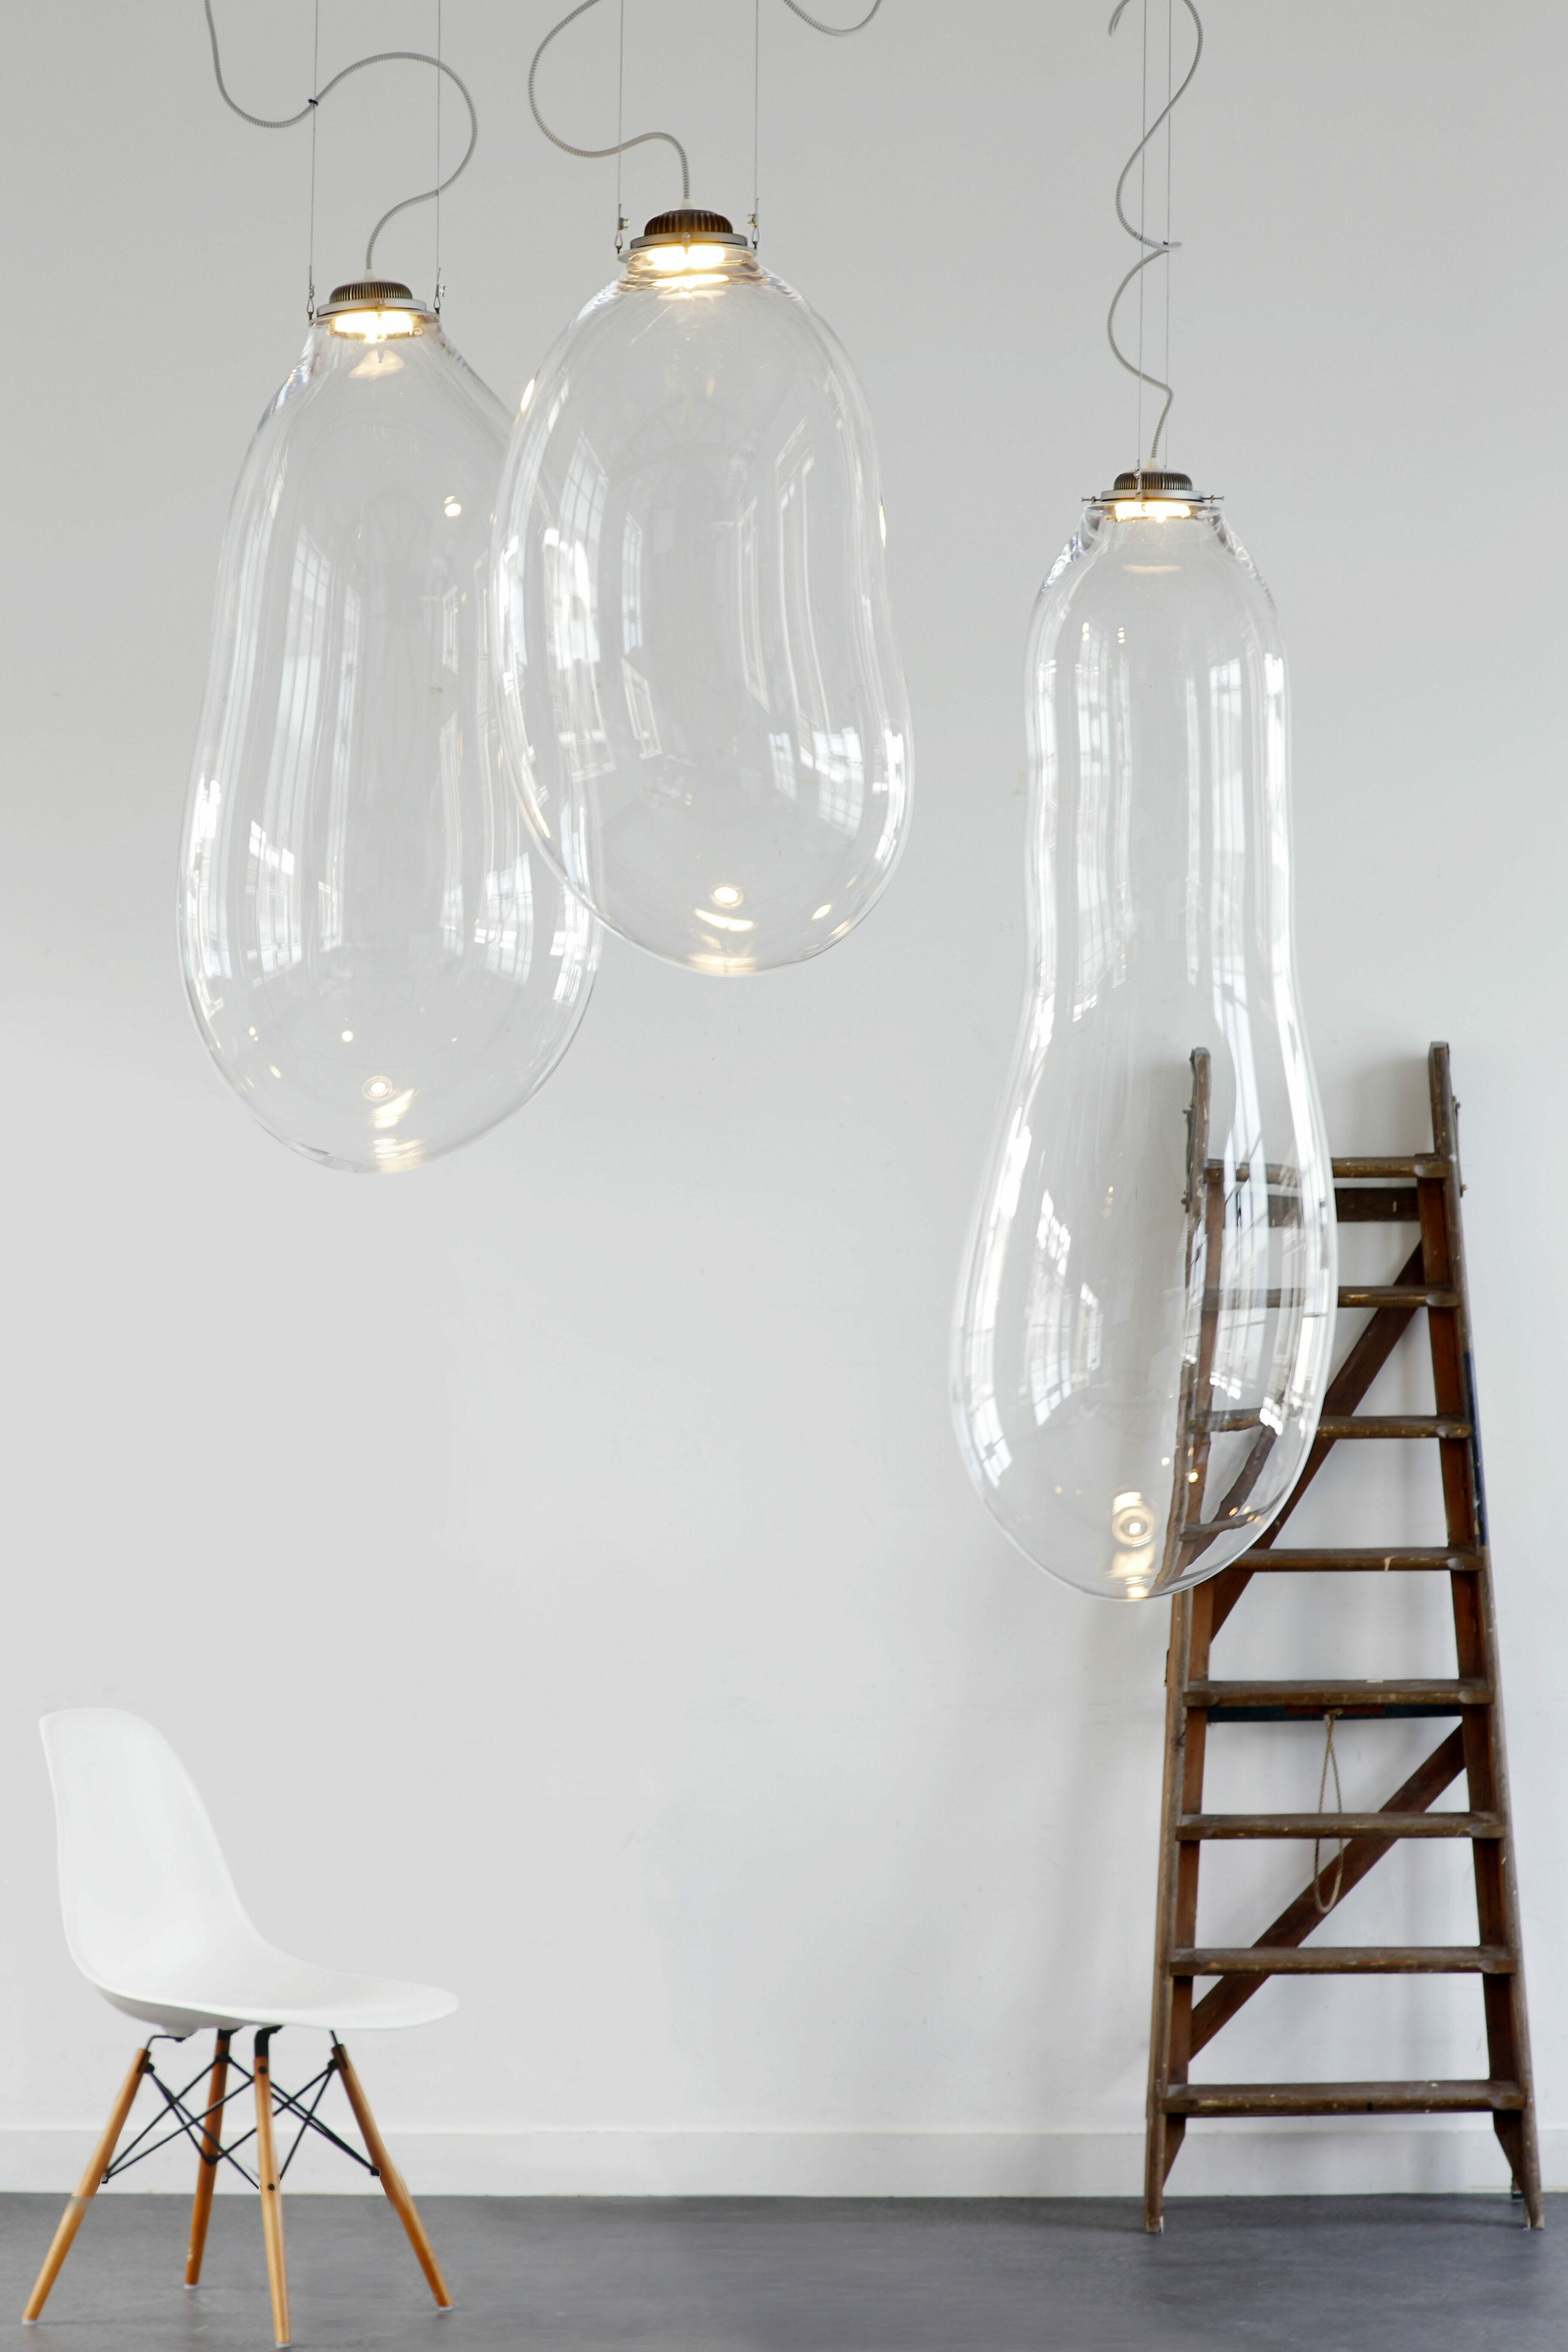 the big bubble set Alex de witt lampe design inneneinrichtung